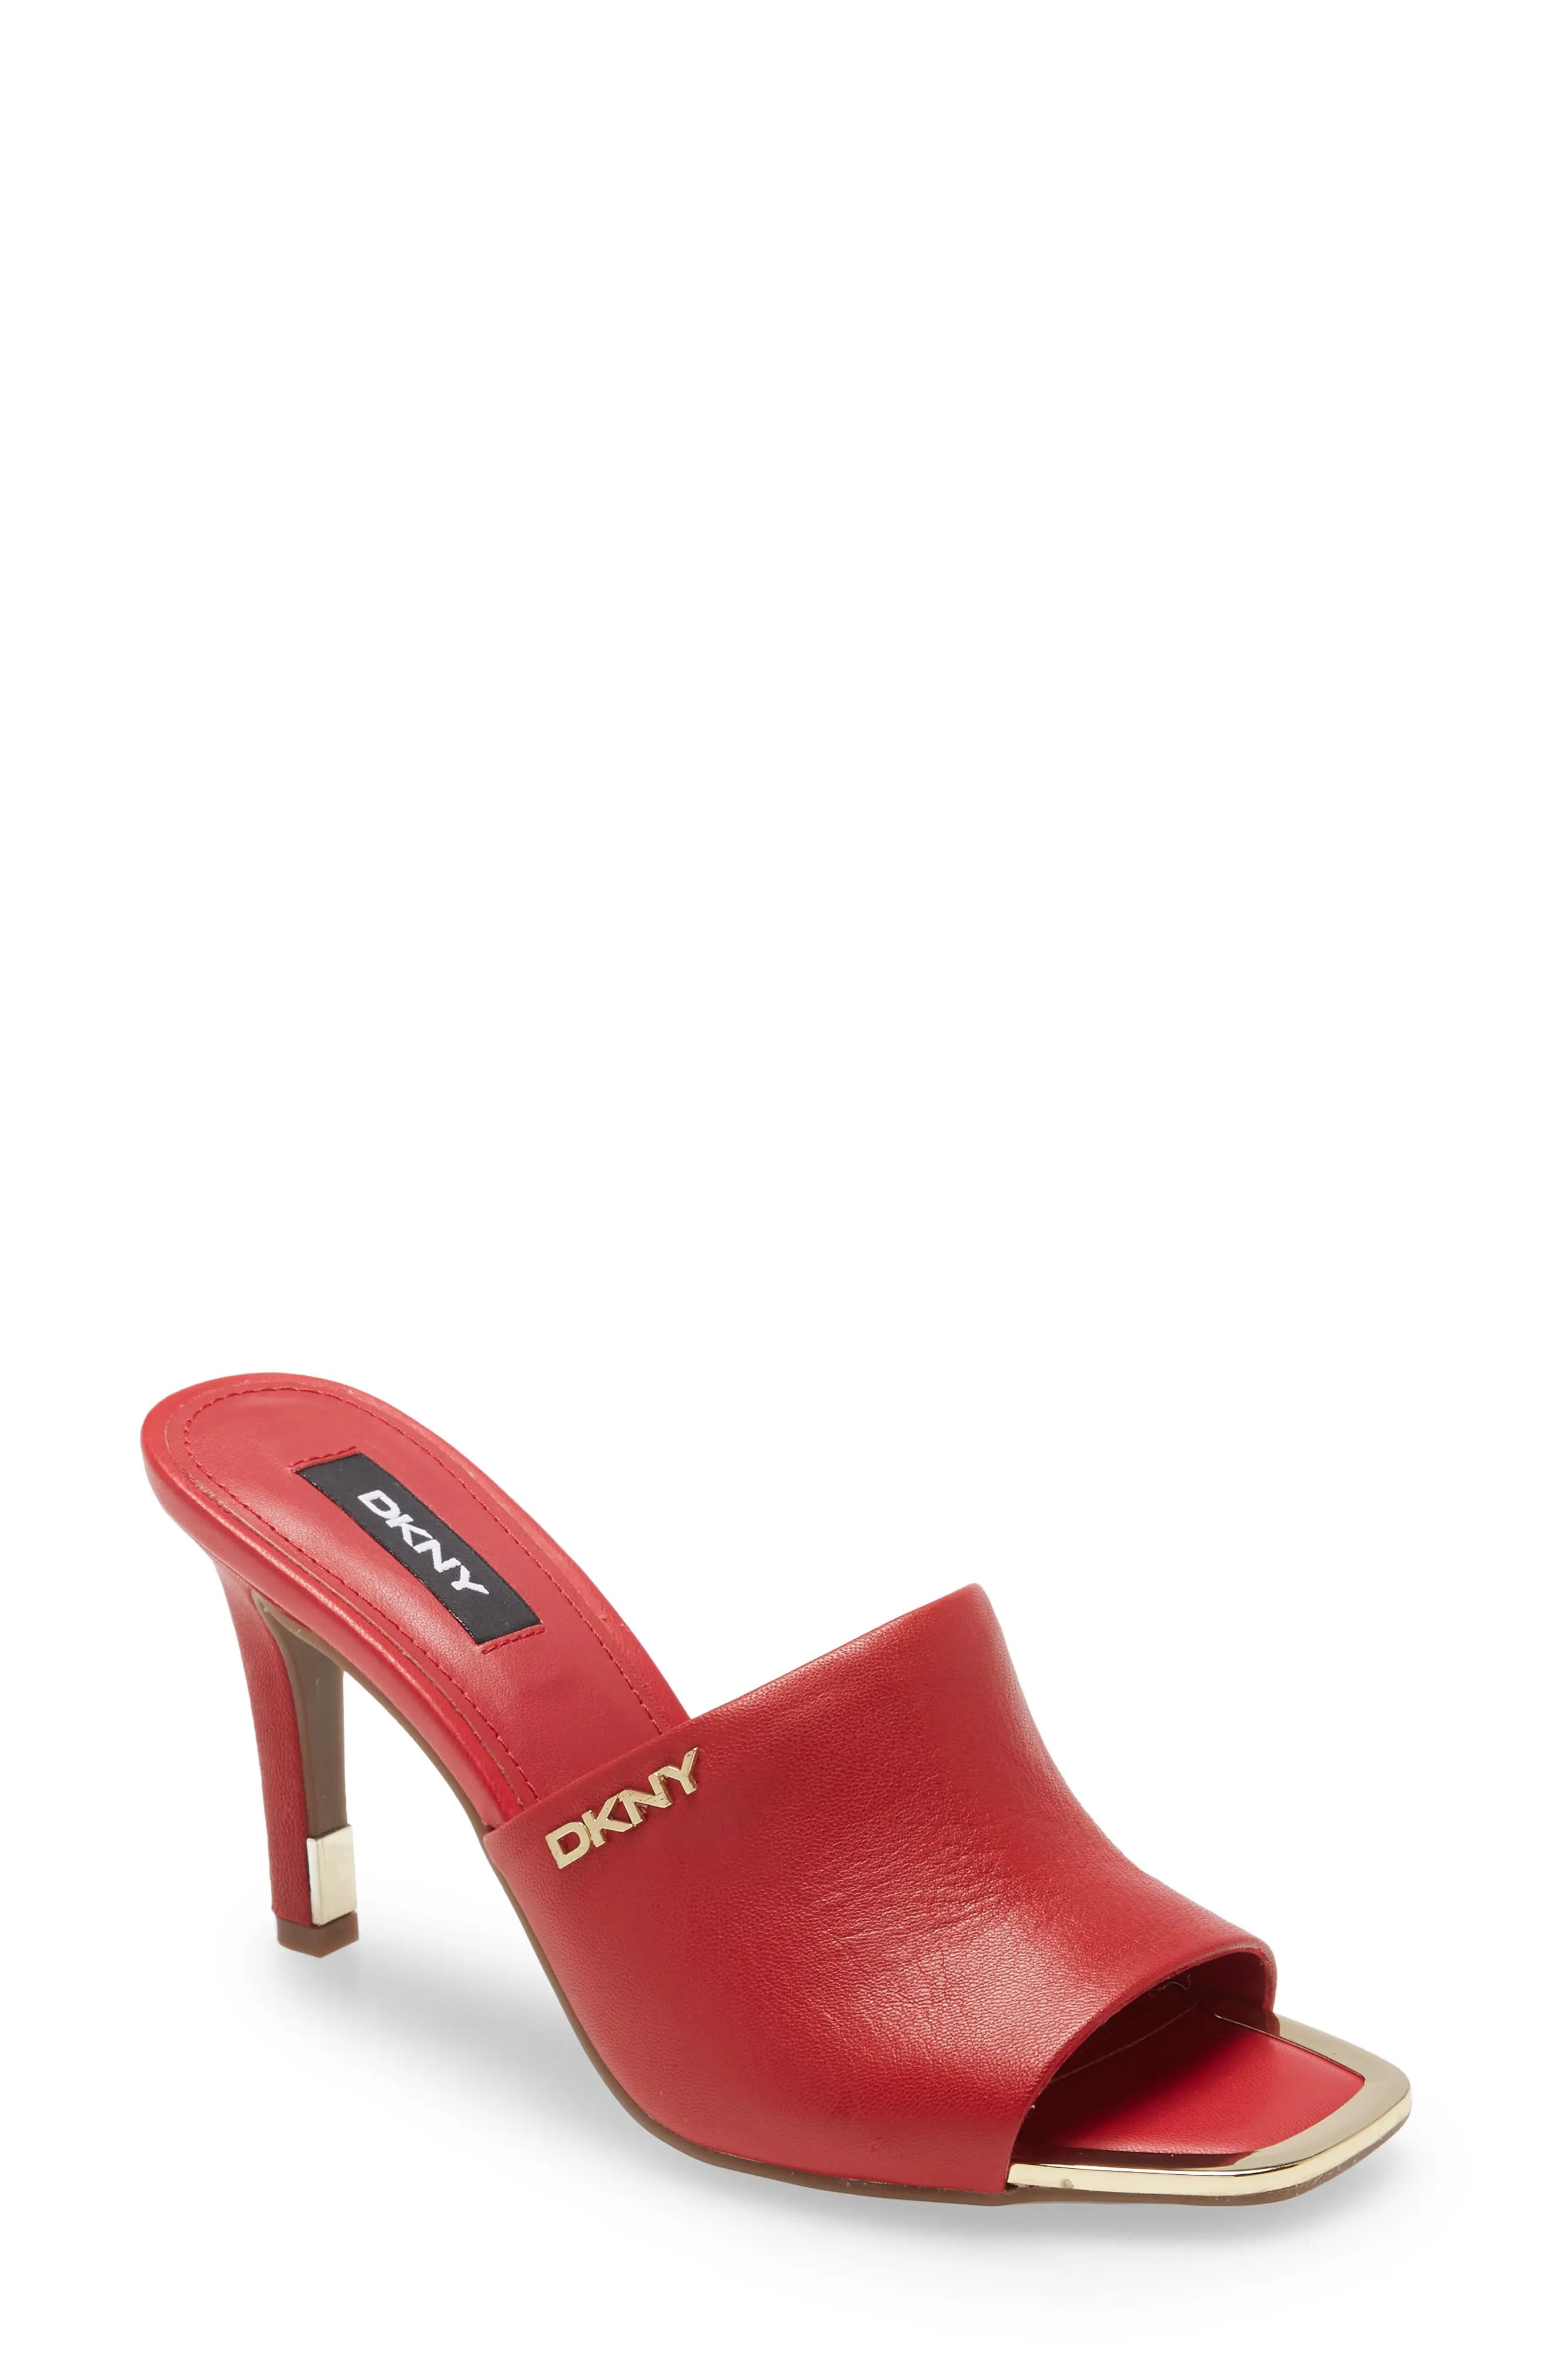 DKNY Bronx Slip-On Mule Sandal, Size 7 in Red at Nordstrom | Nordstrom